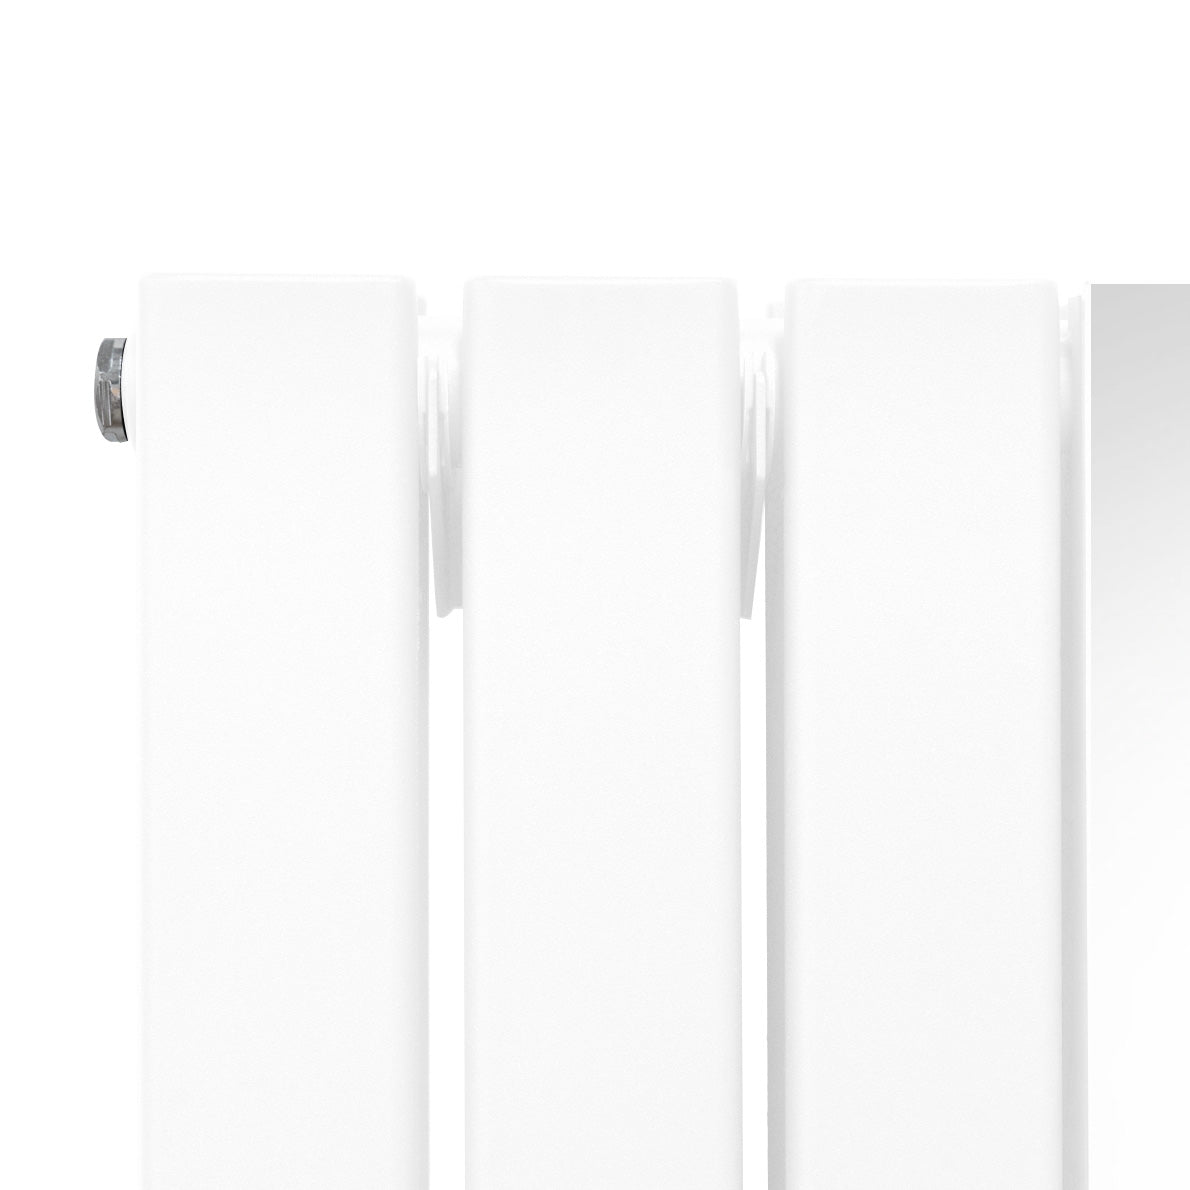 Radiateur Plat avec Miroir & Valves - 1800mm x 565mm – Blanc